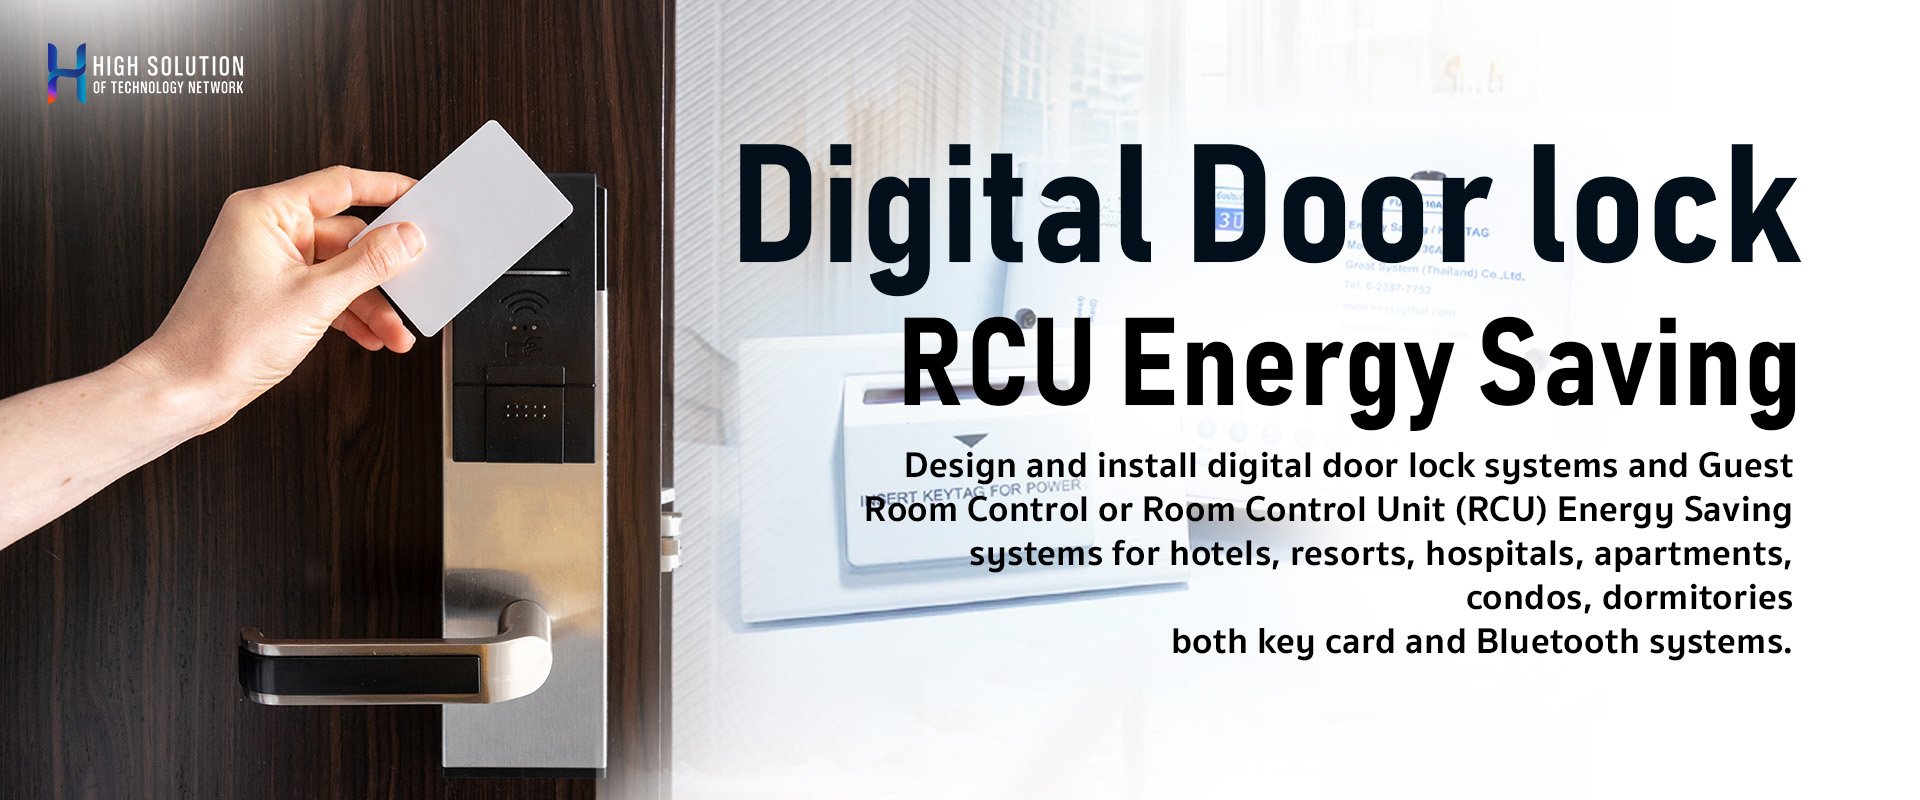 Digital_Door_Locl_RCU_Energy_By_Highsolution